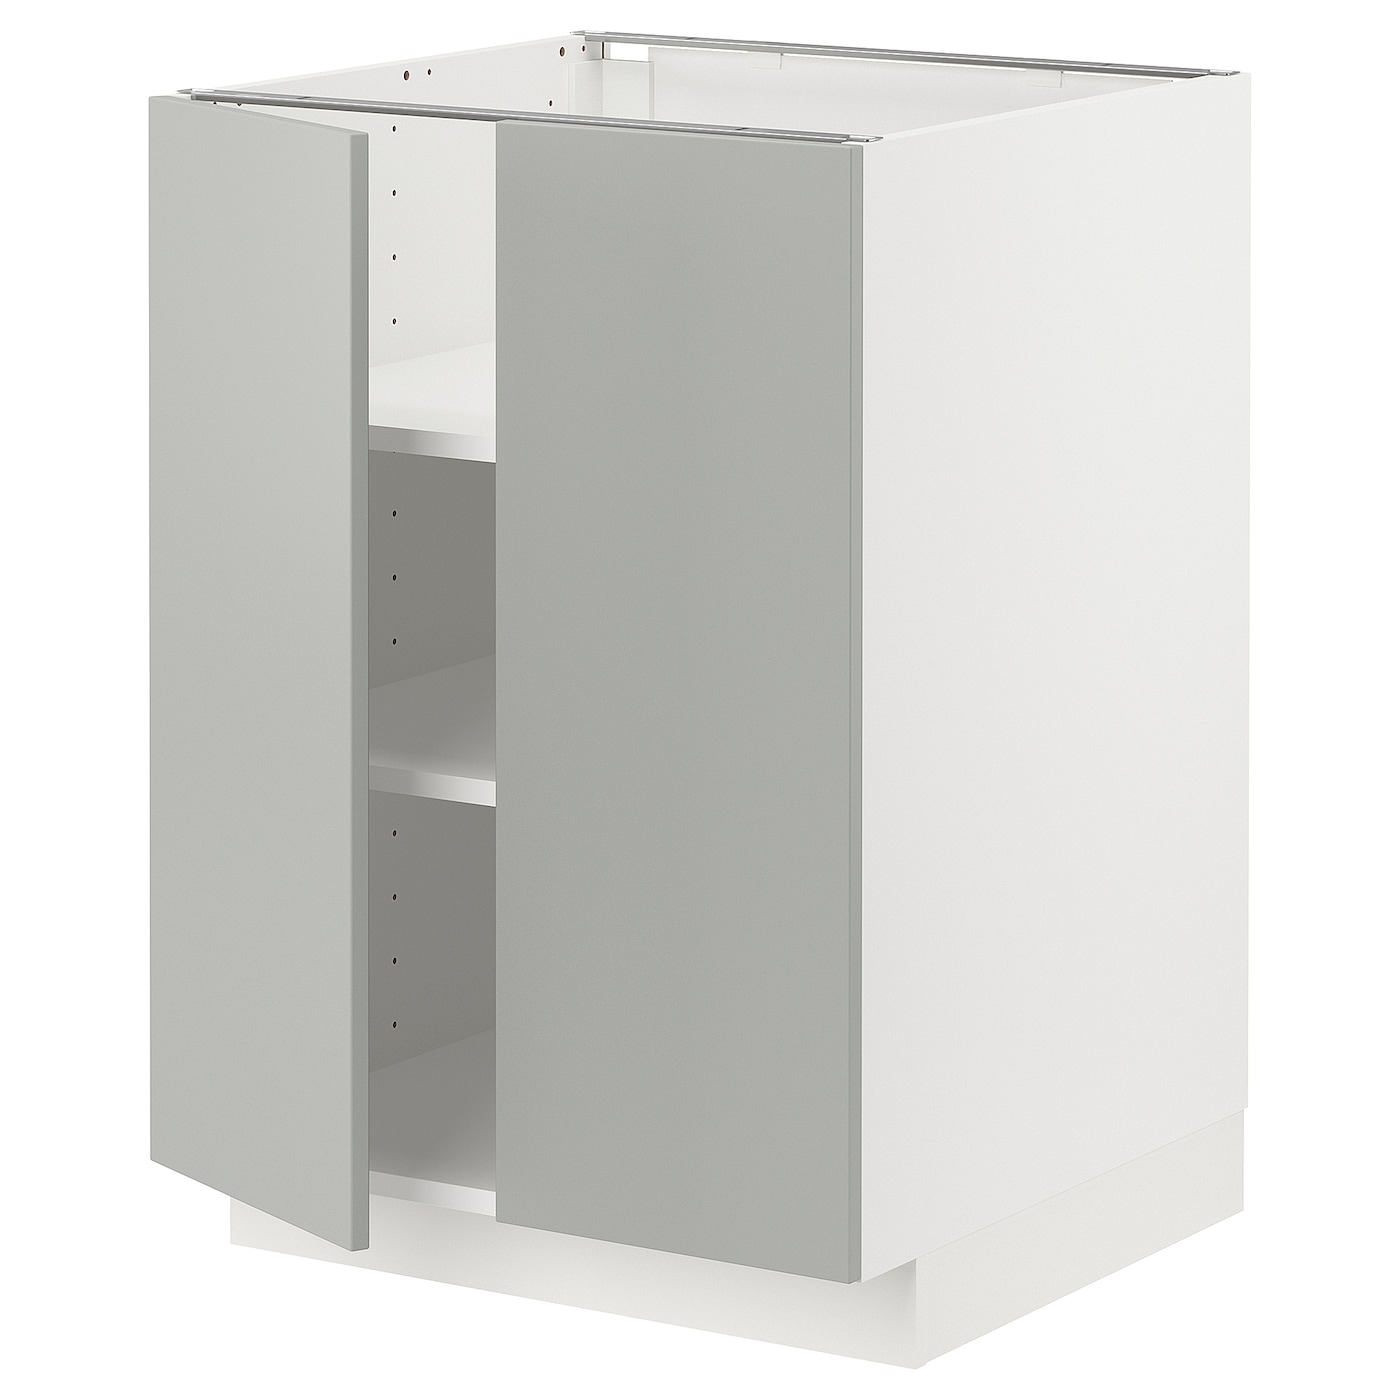 Напольный шкаф - METOD IKEA/ МЕТОД ИКЕА,  60х88 см, белый/светло-серый